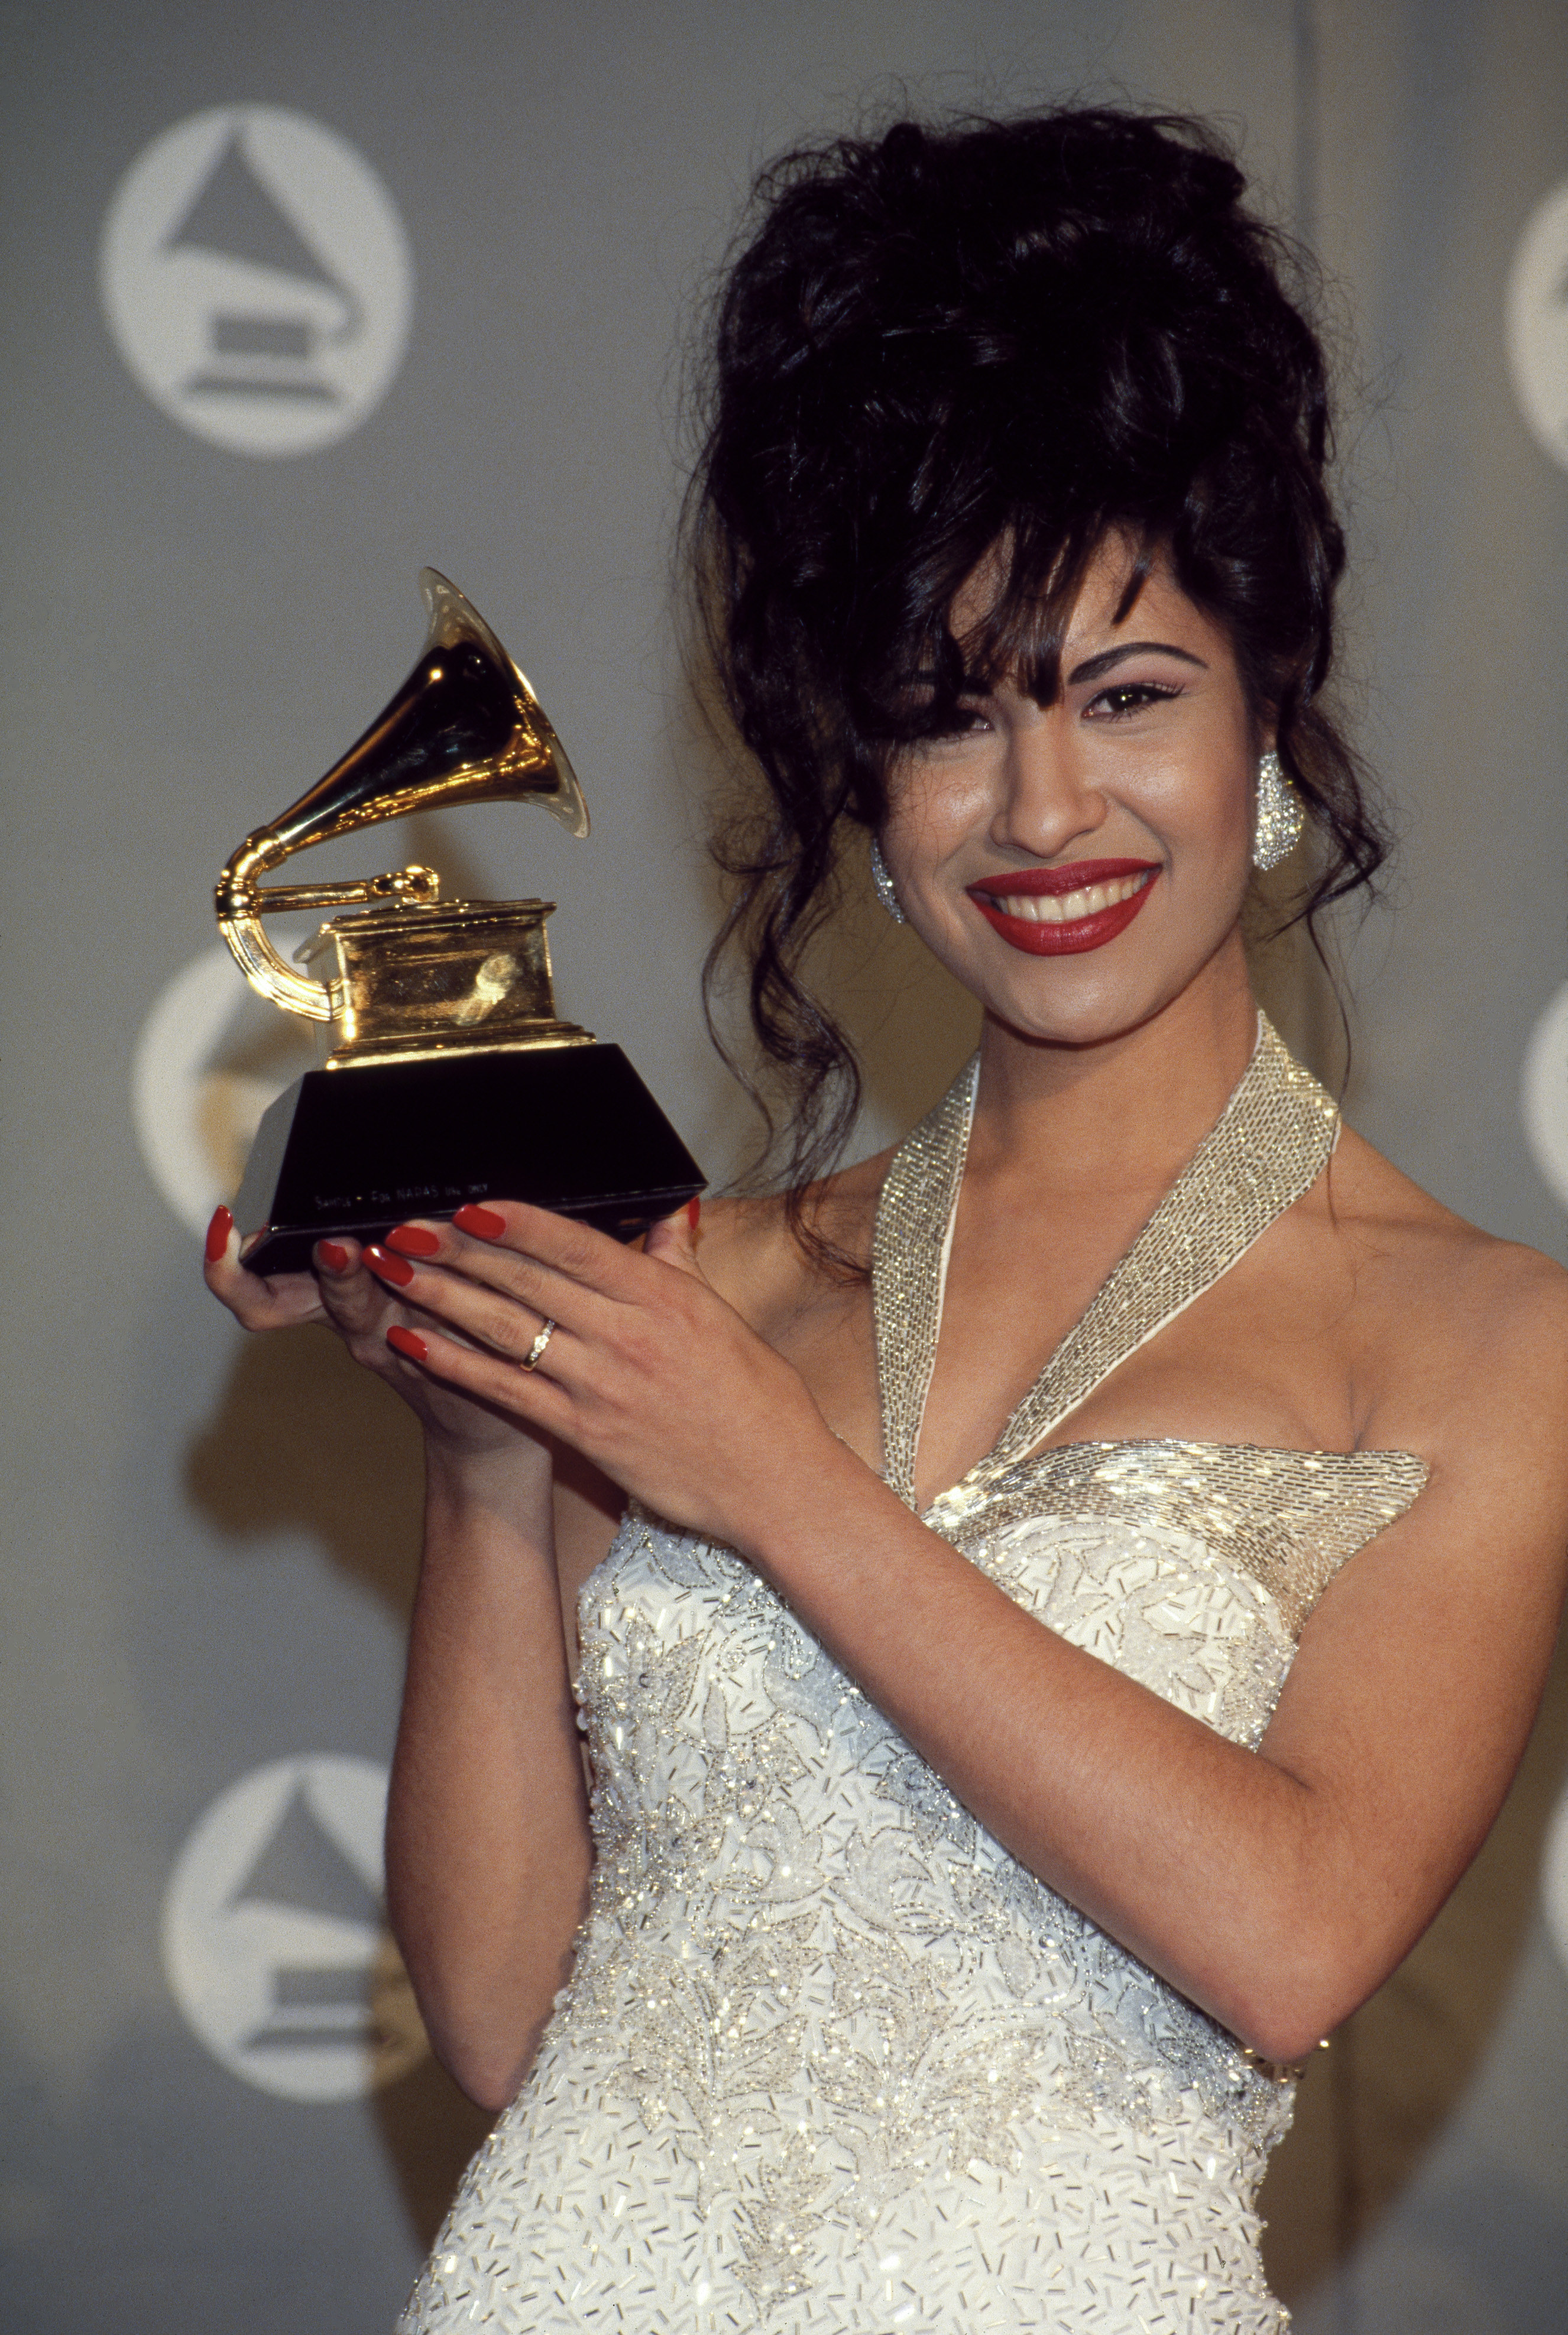 Selena holding a Grammy award